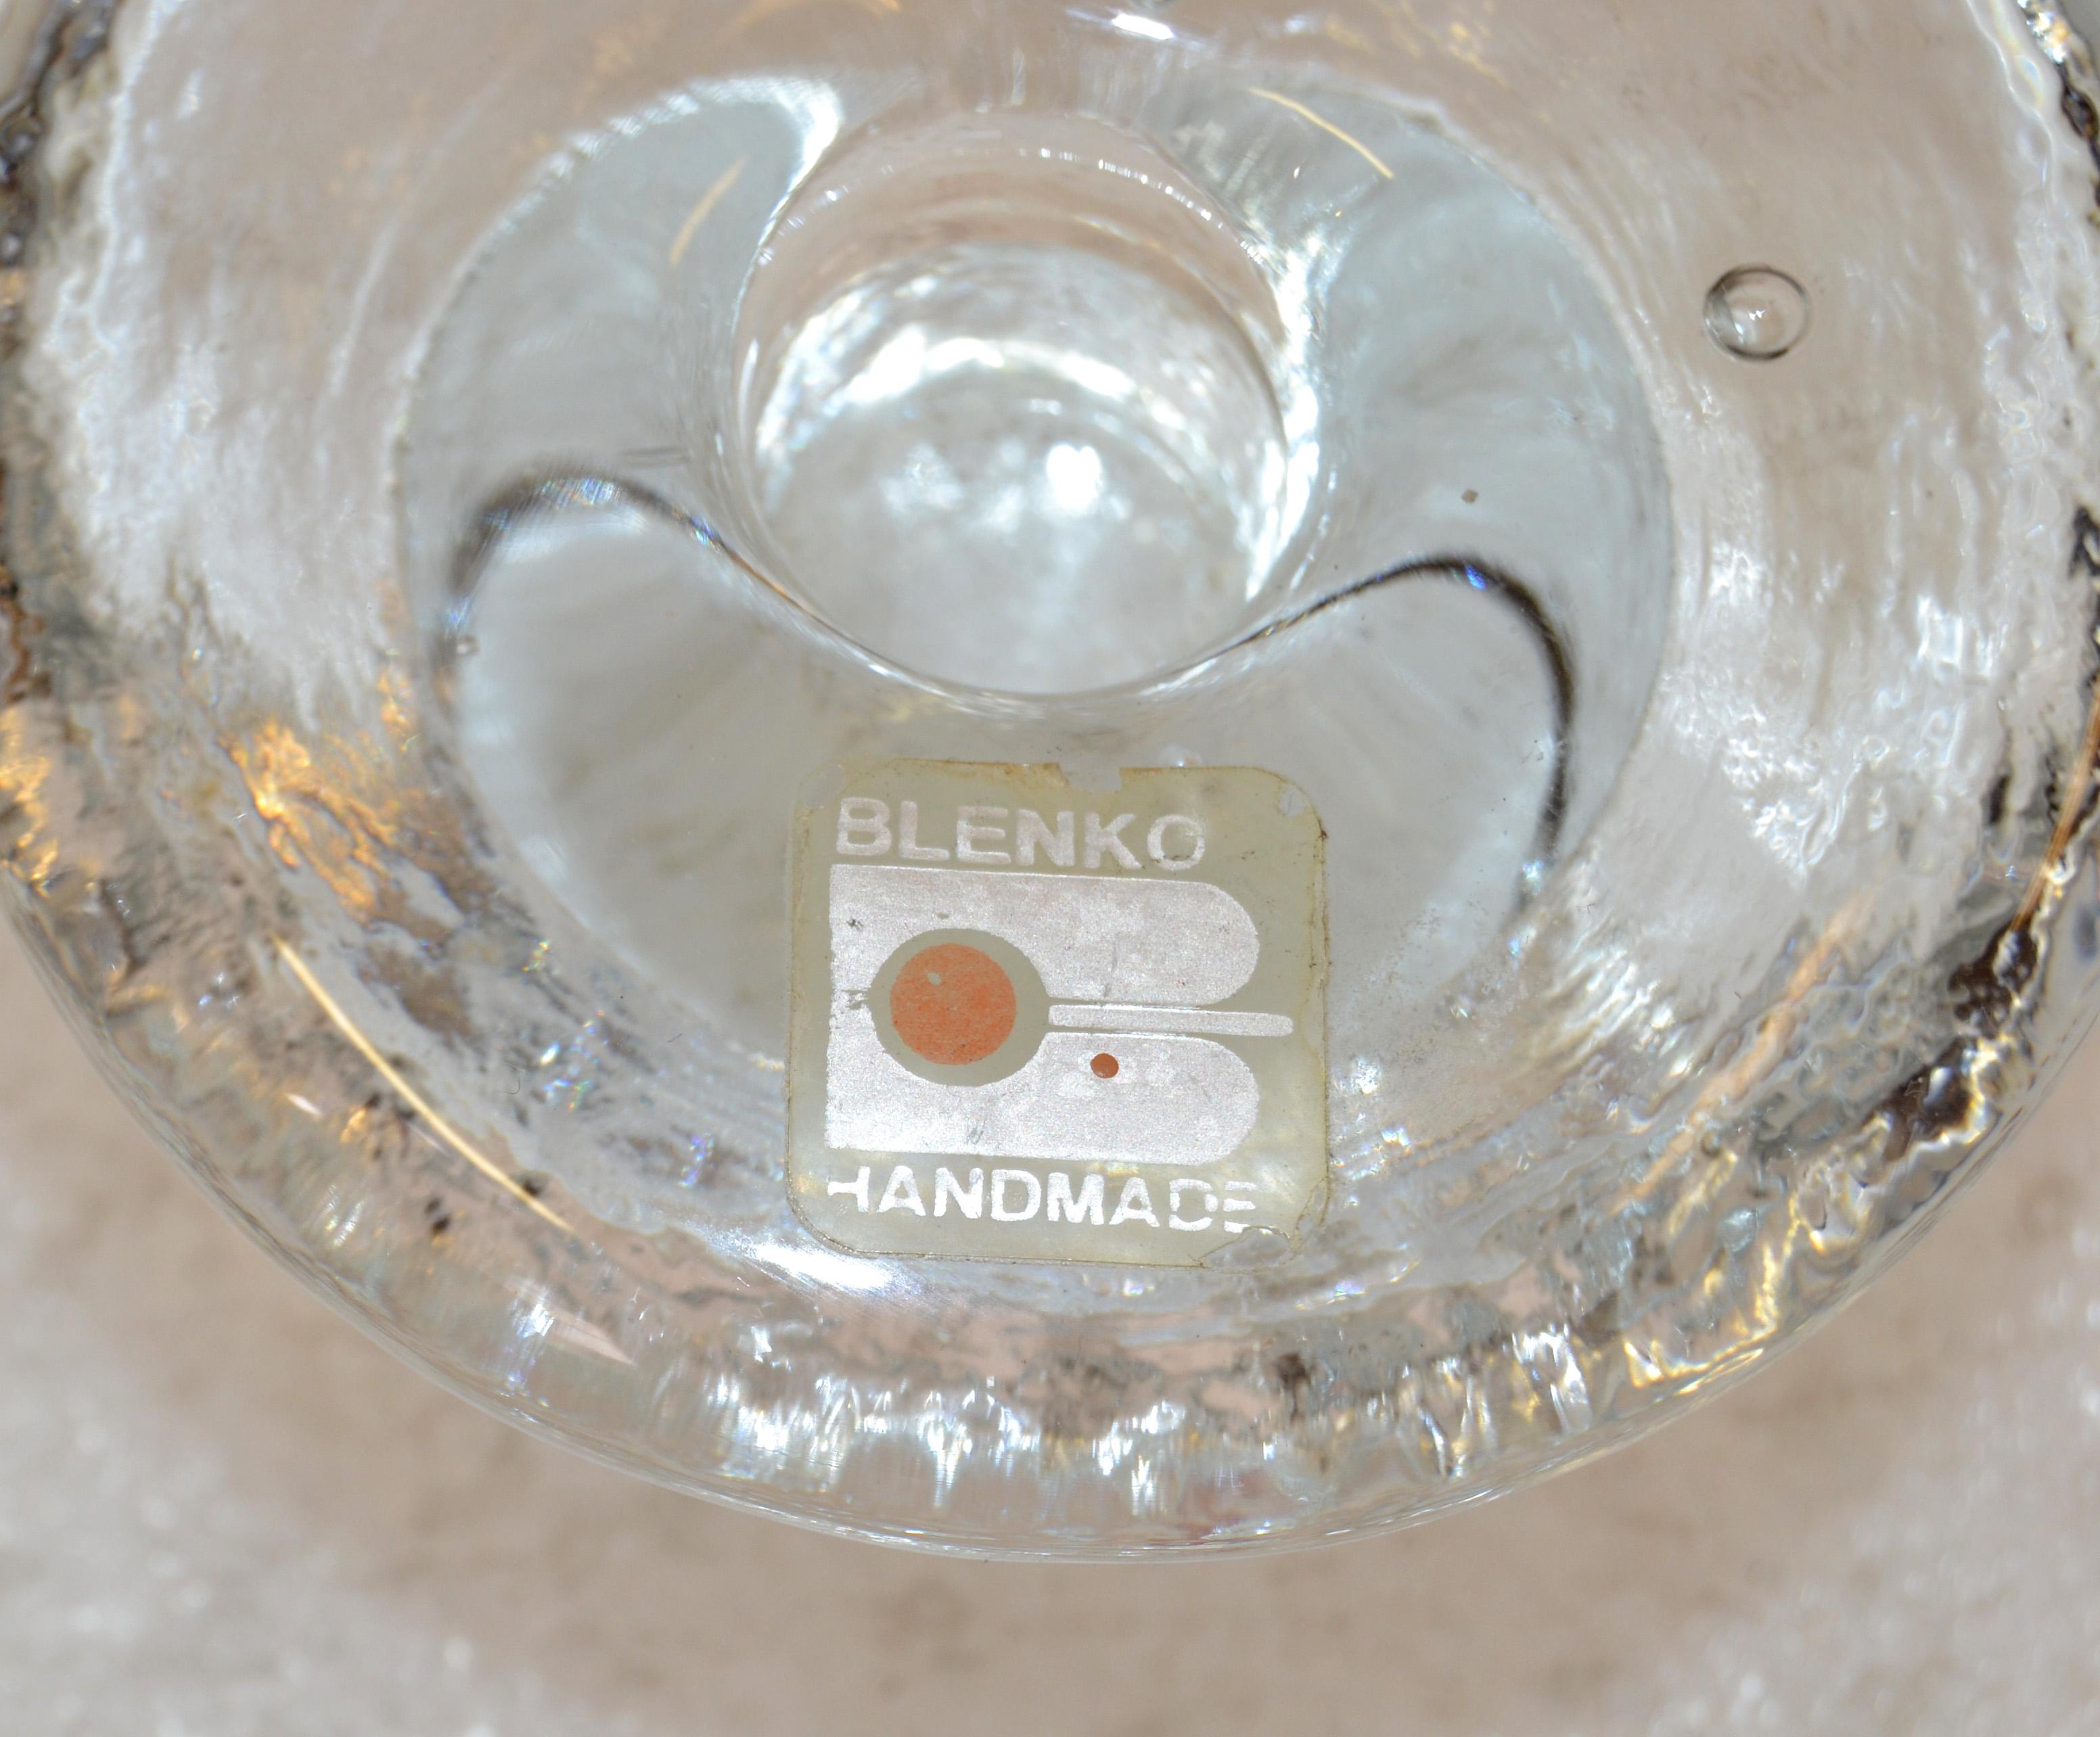 Set 3 Vintage Blenko Art Glass Ice Mushroom Candle Holders Designed Don Shepherd 1